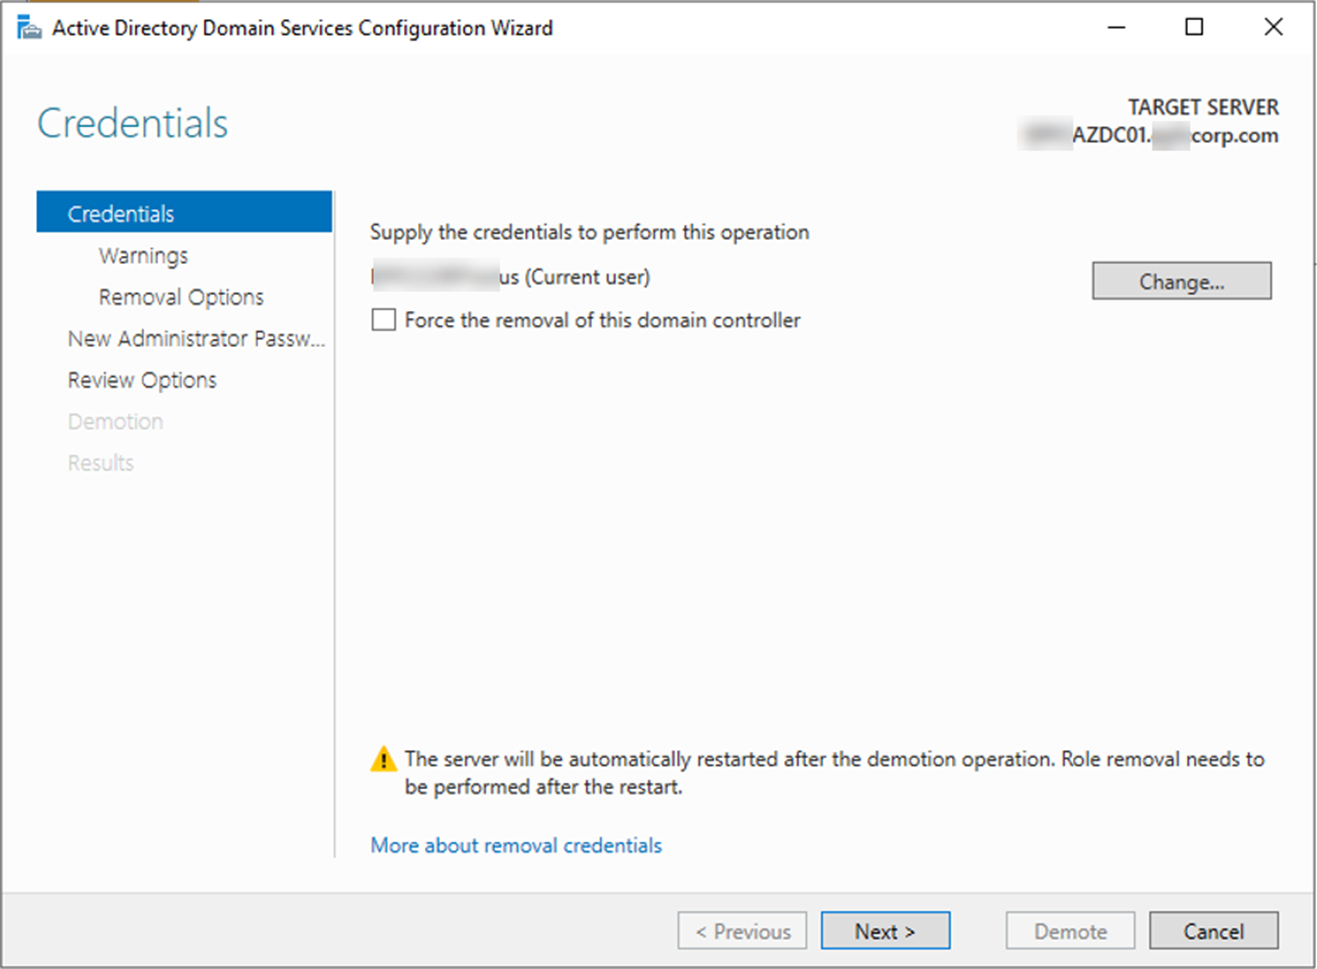 101120 0520 HowtoDemote12 - How to Demote Microsoft Windows Server 2019 Domain Controller Virtual Machine at Azure